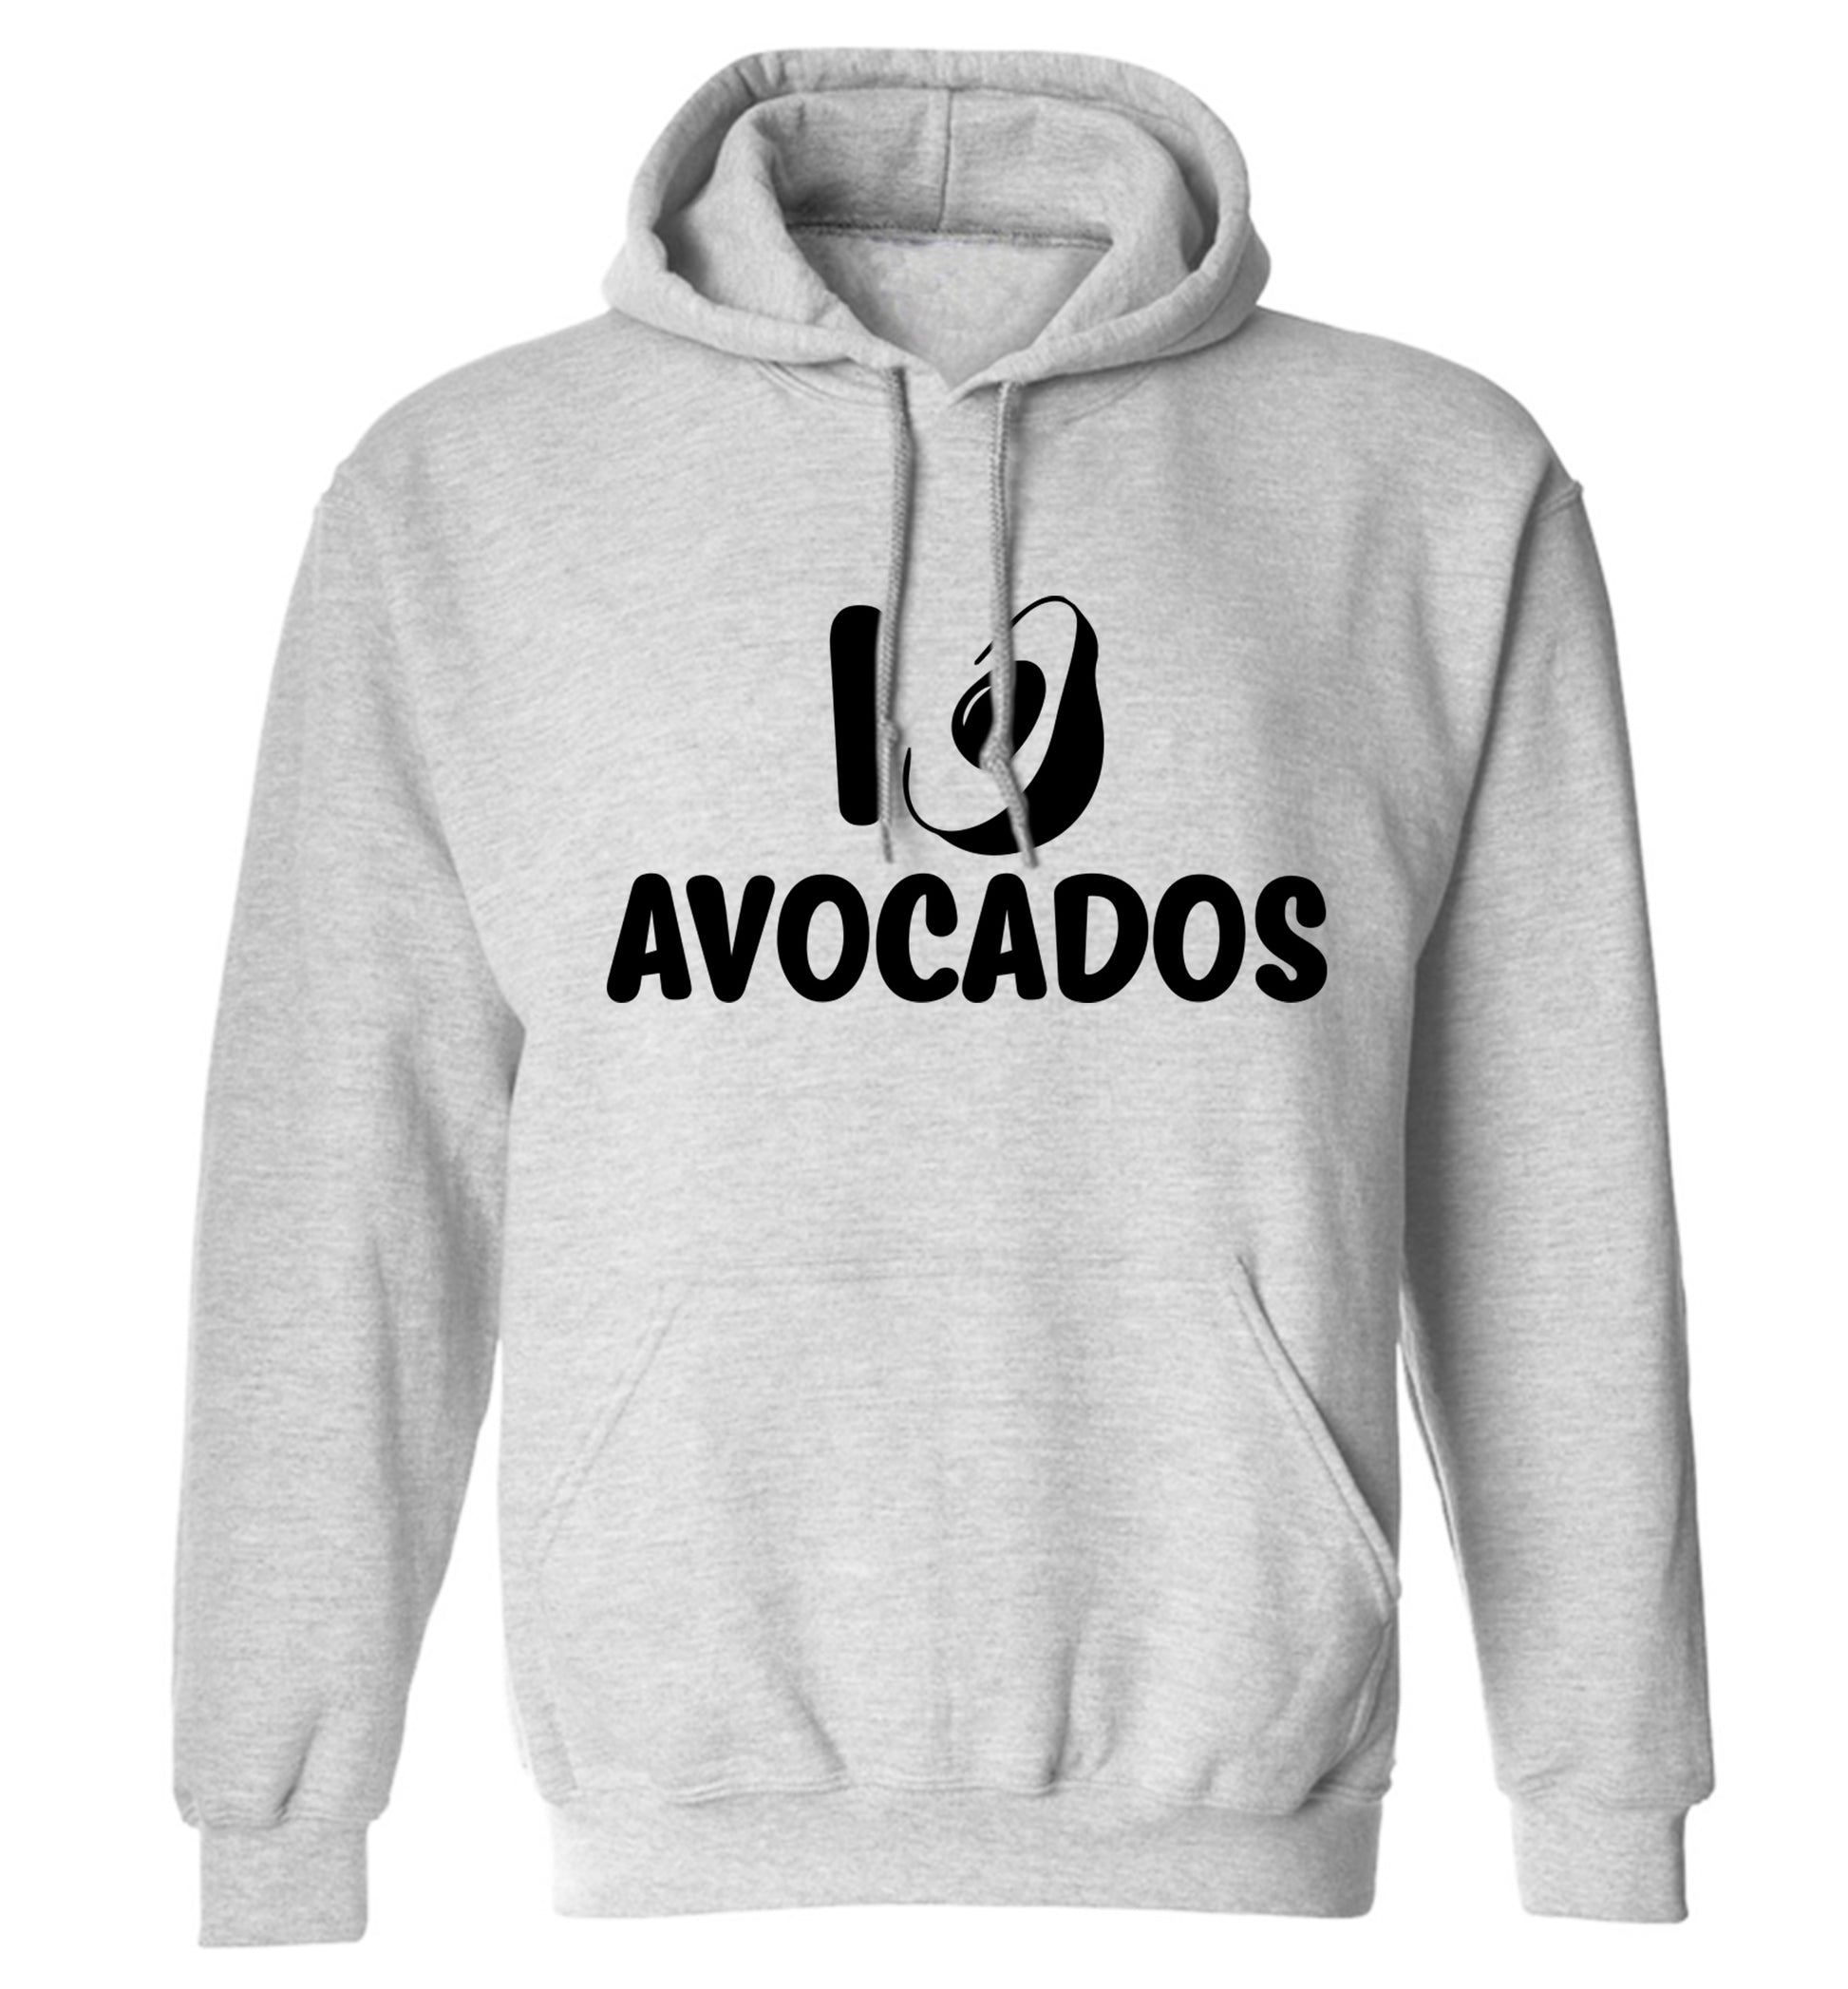 I love avocados adults unisex grey hoodie 2XL